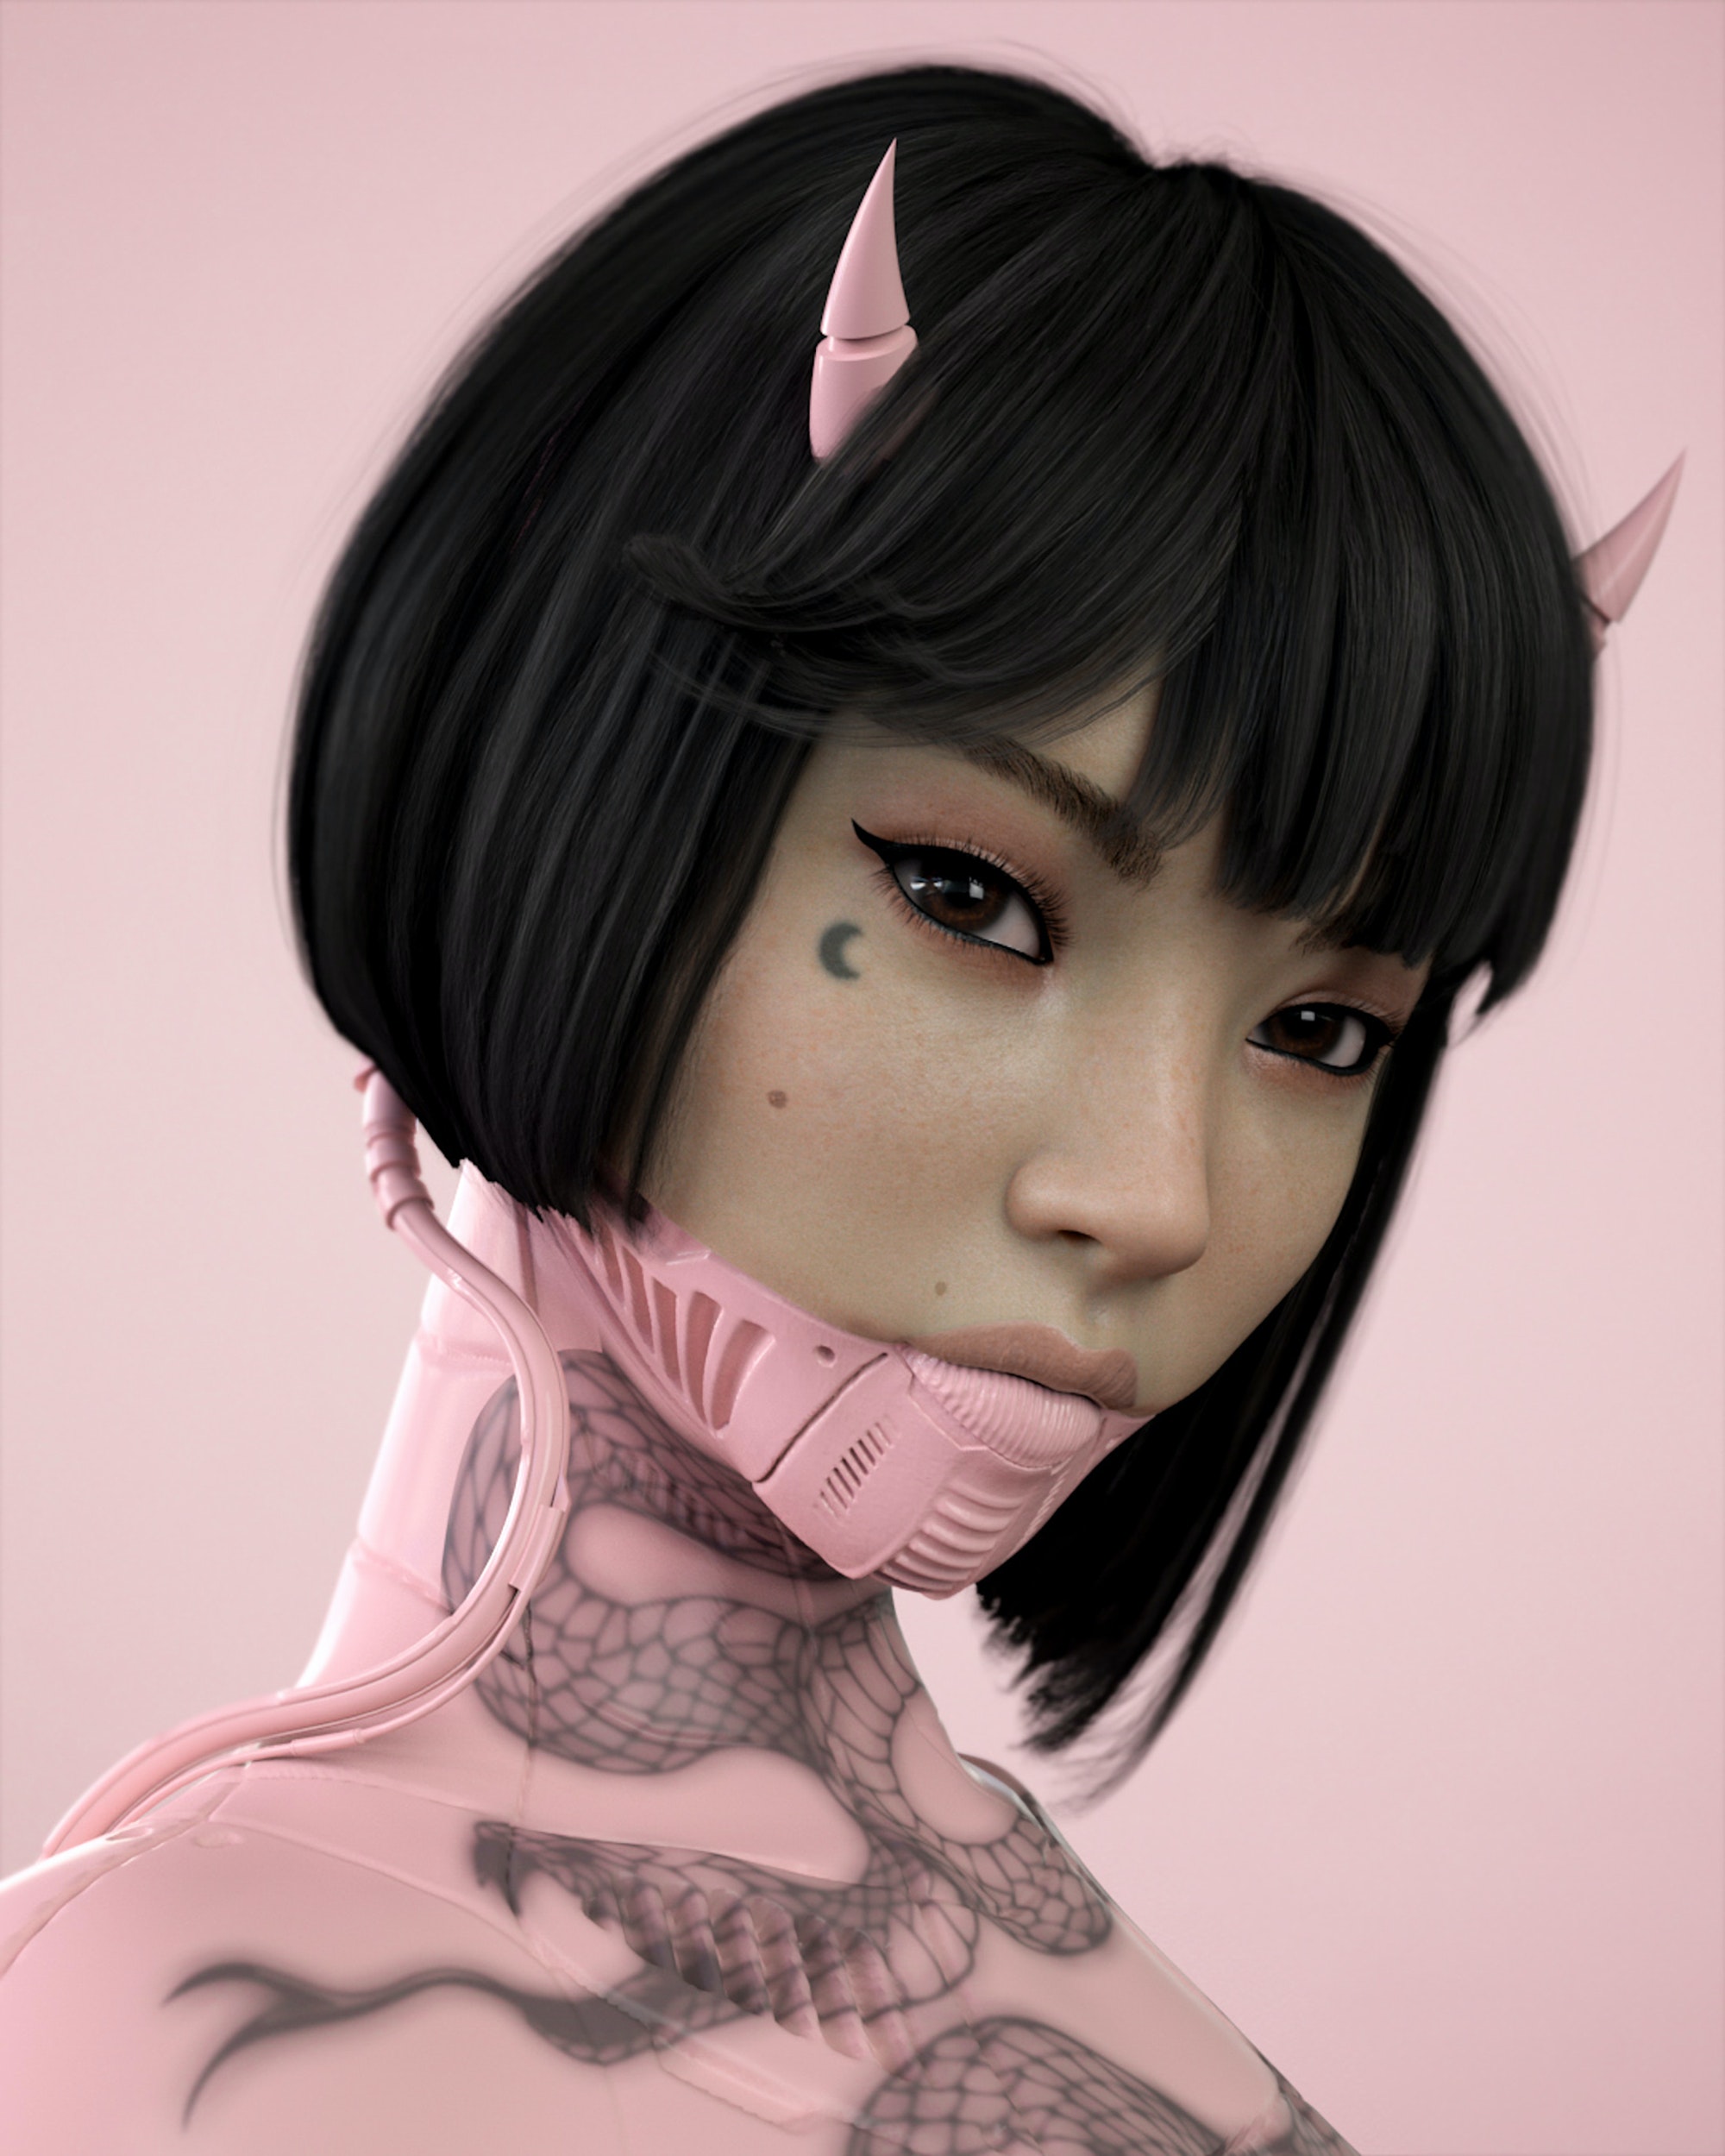 Digital Art Artwork Illustration Women Portrait Cyberpunk Dark Hair Short Hair Asian Looking At View 2000x2499